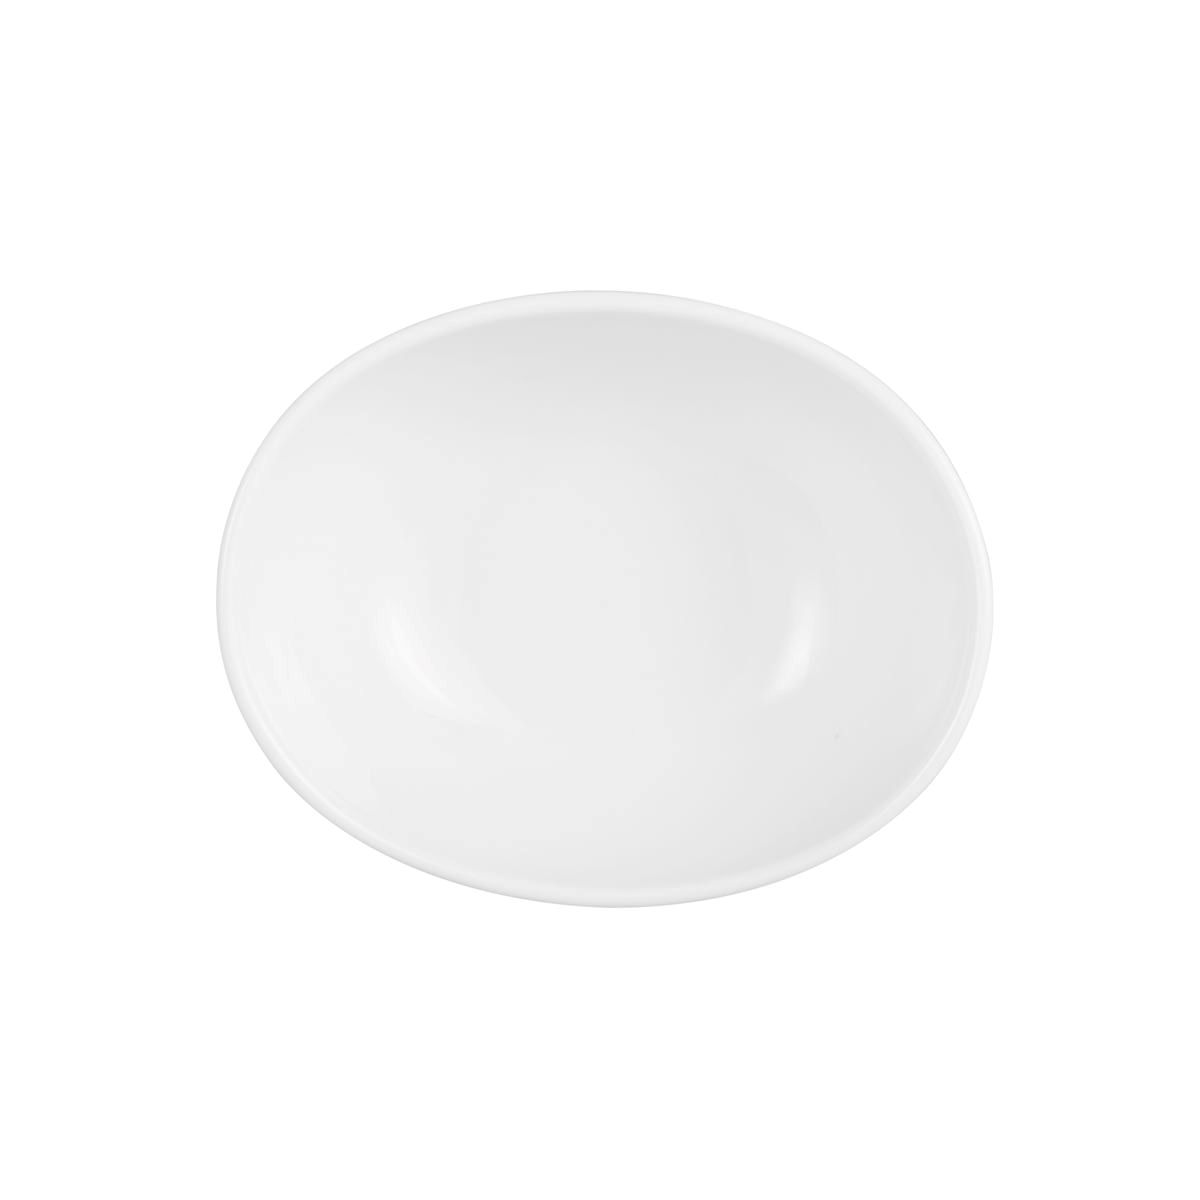 Bowl oval M5306  12 cm - Serie Meran